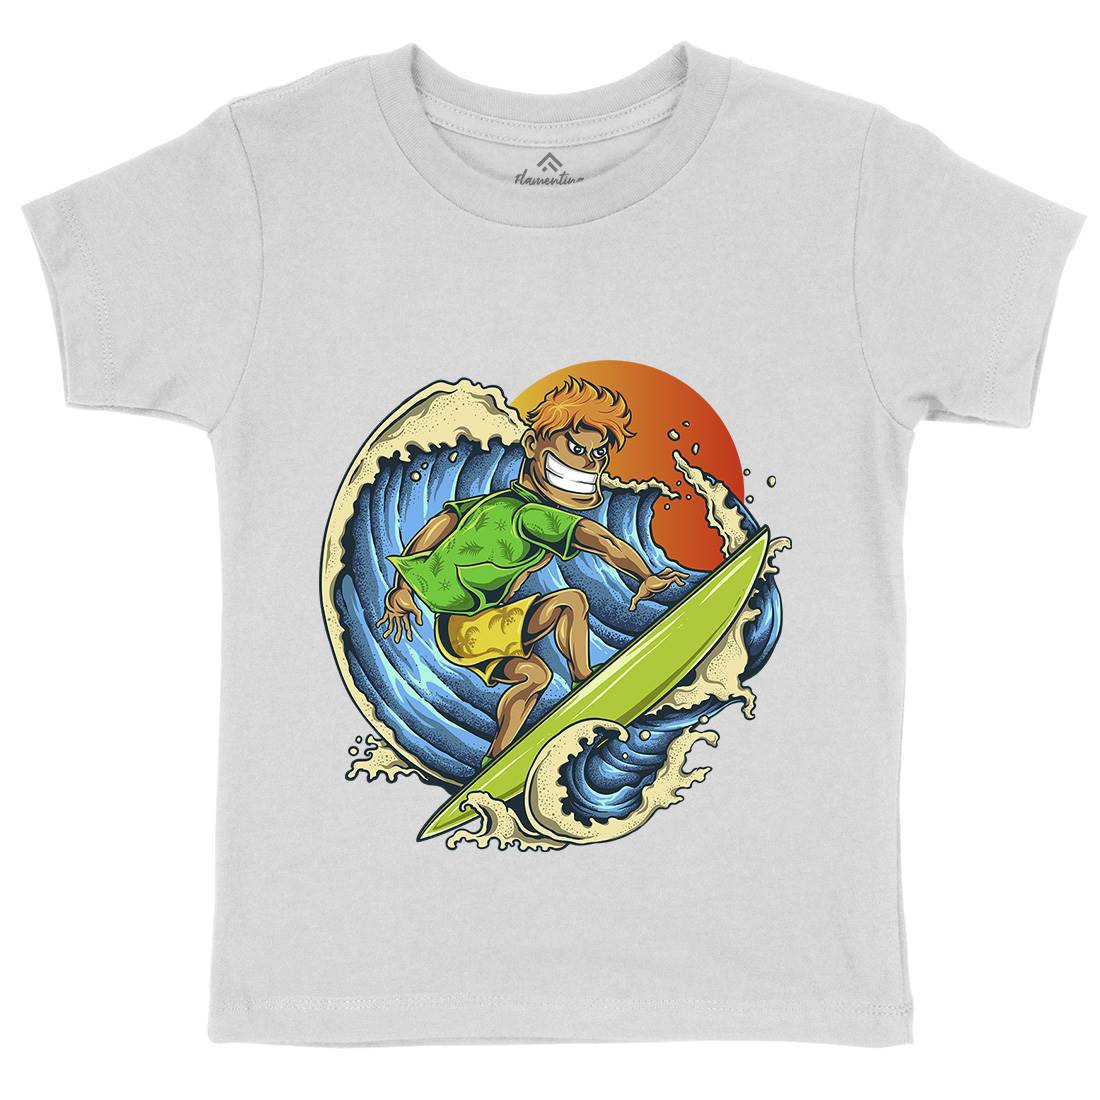 Pro Surfer Kids Organic Crew Neck T-Shirt Surf A454